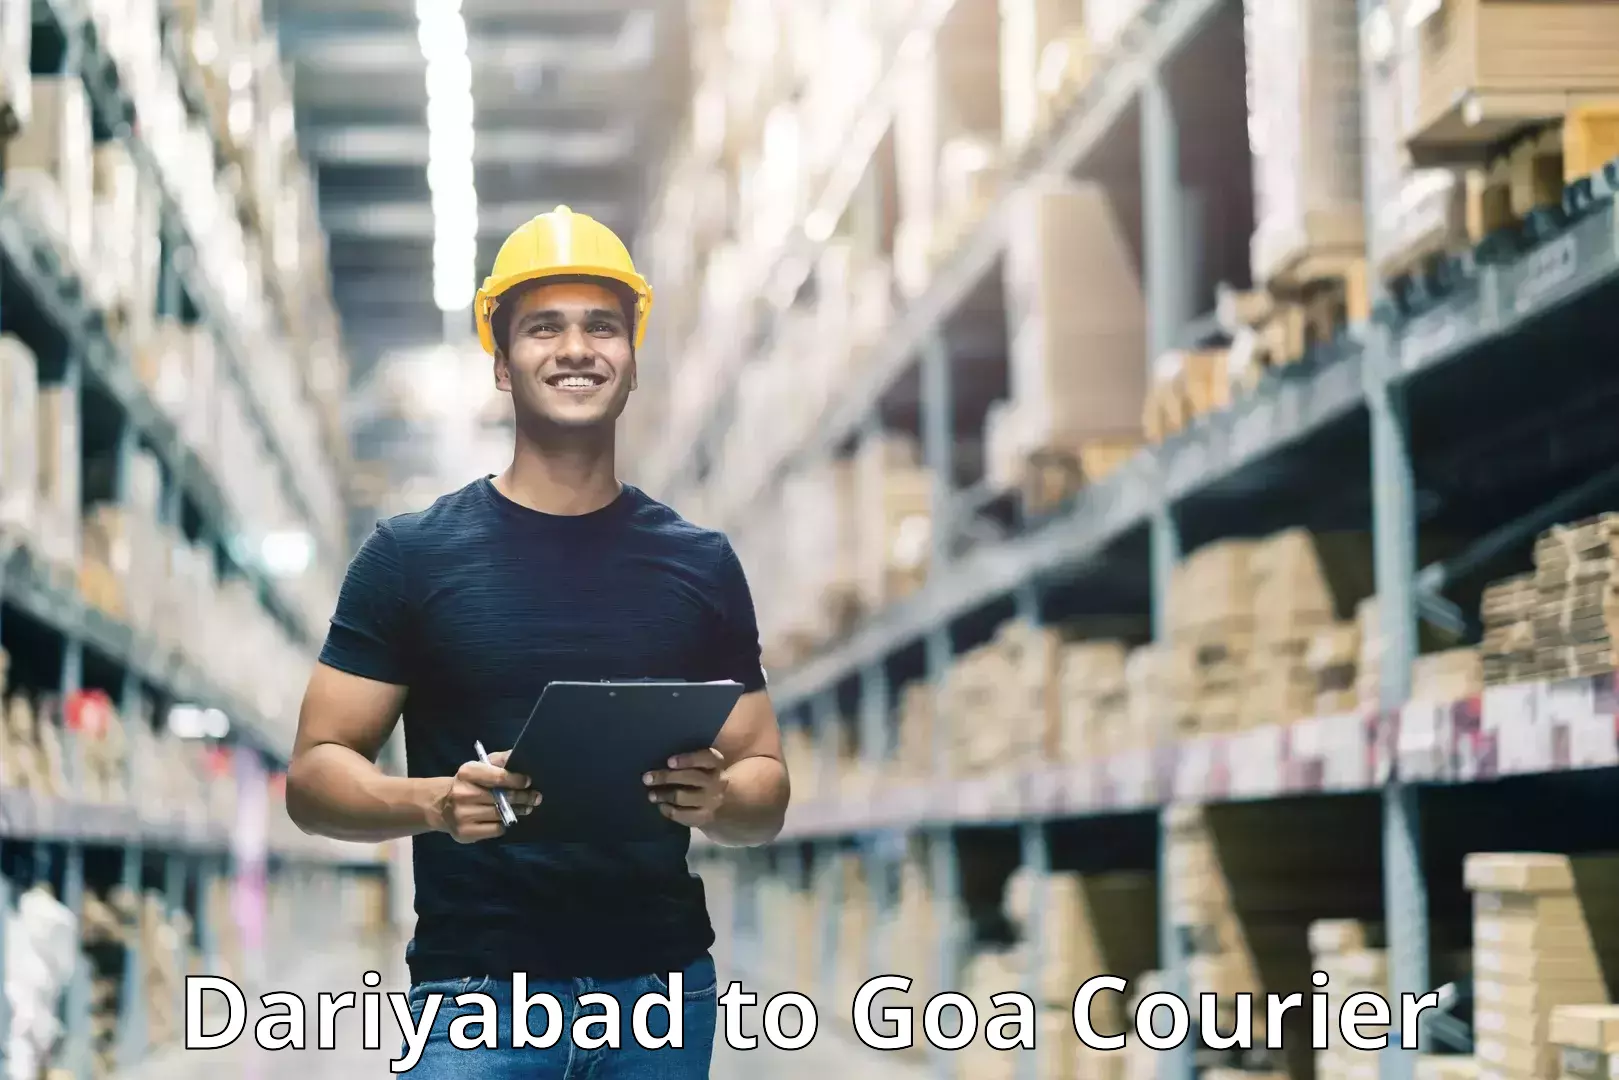 State-of-the-art courier technology Dariyabad to Panaji